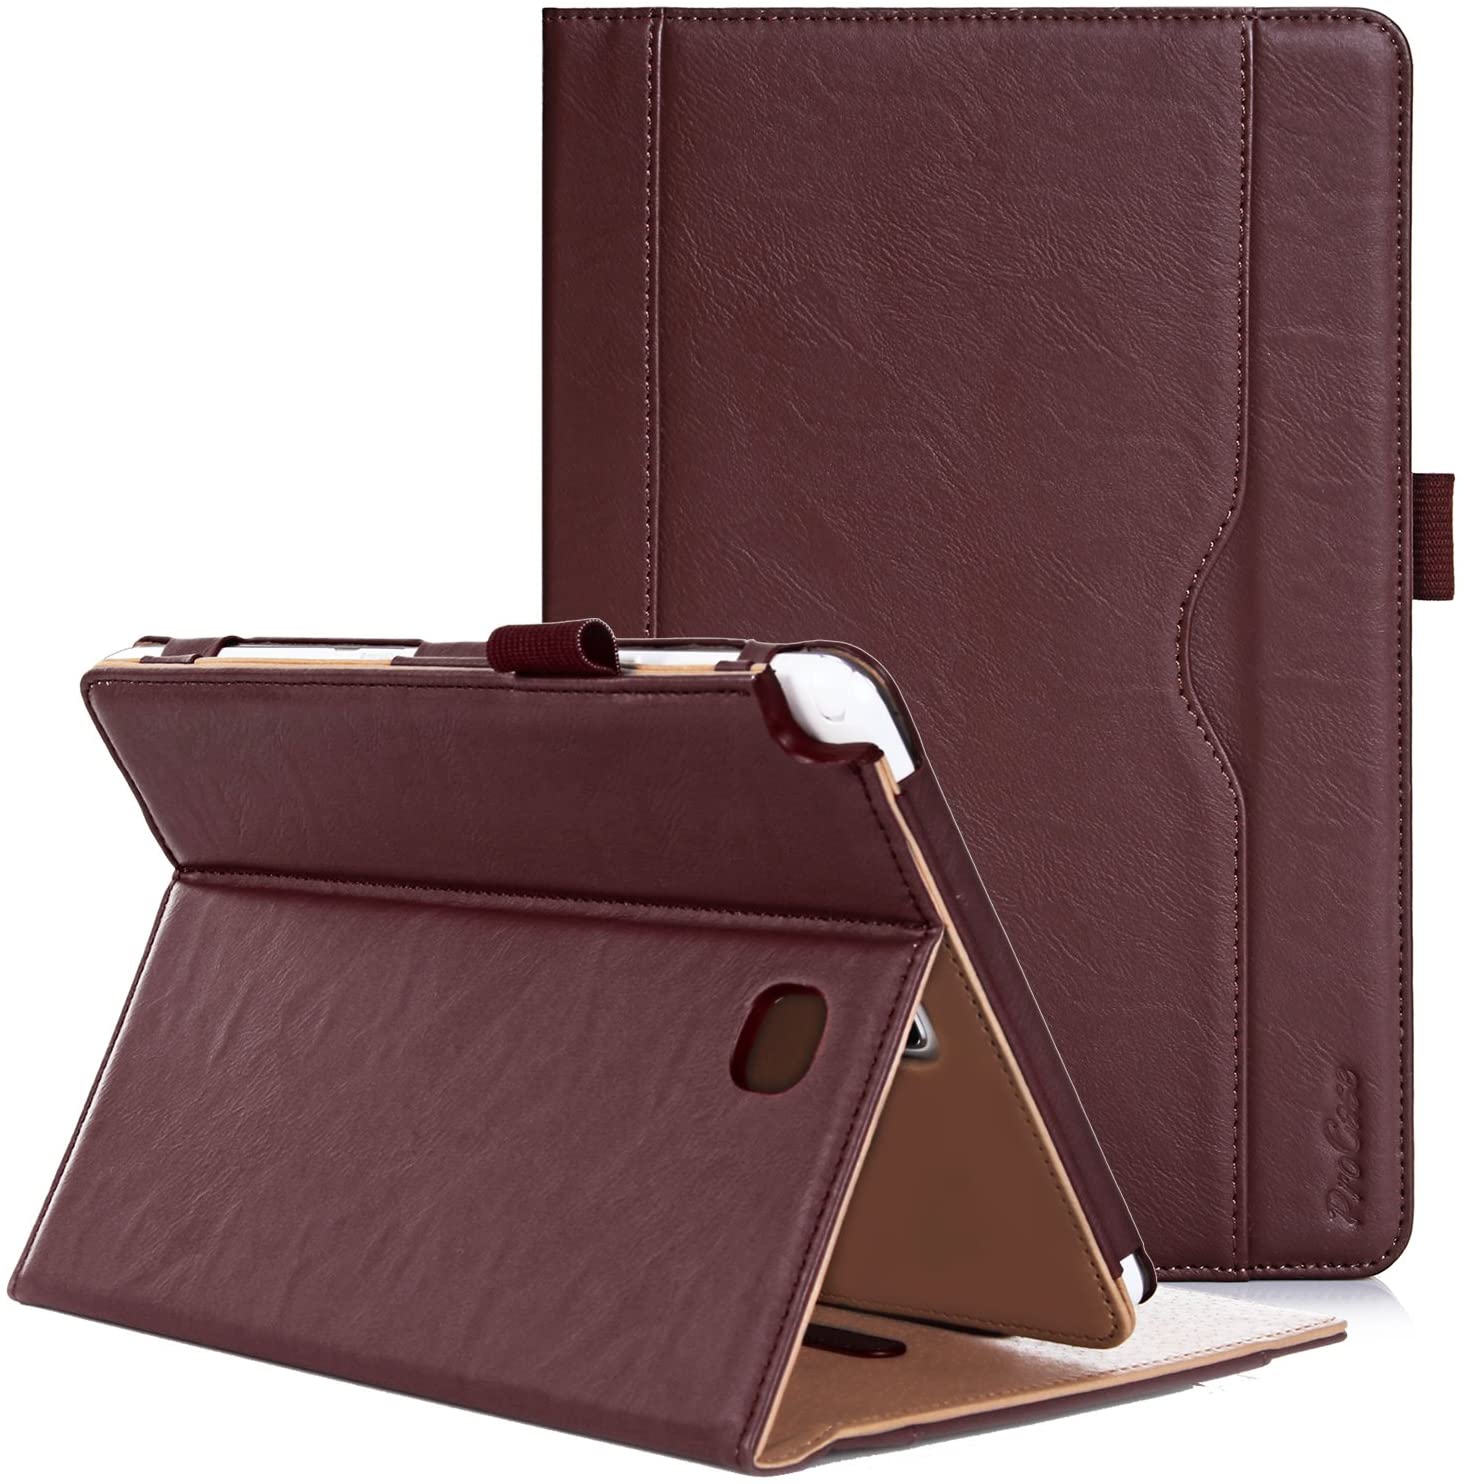 Galaxy Tab A 8.0 2015 T350 Leather Folio Case | ProCase brown